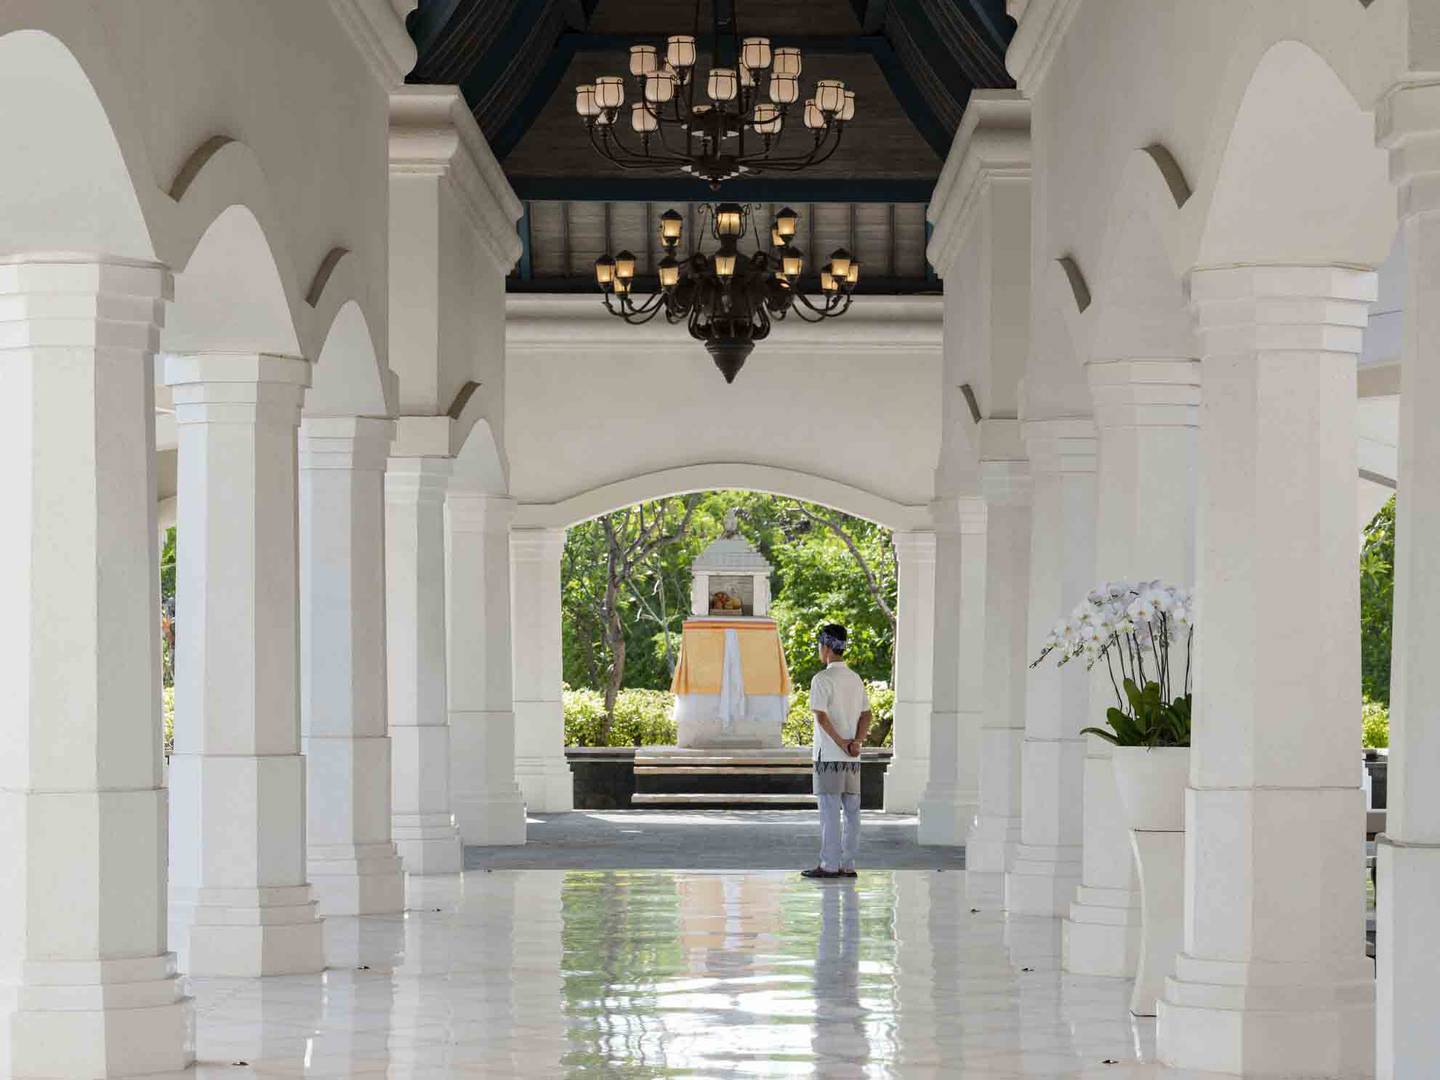 Jumeirah Bali was inspired by the work of Sri Lankan architect Geoffrey Bawa. Photo: Jumeirah